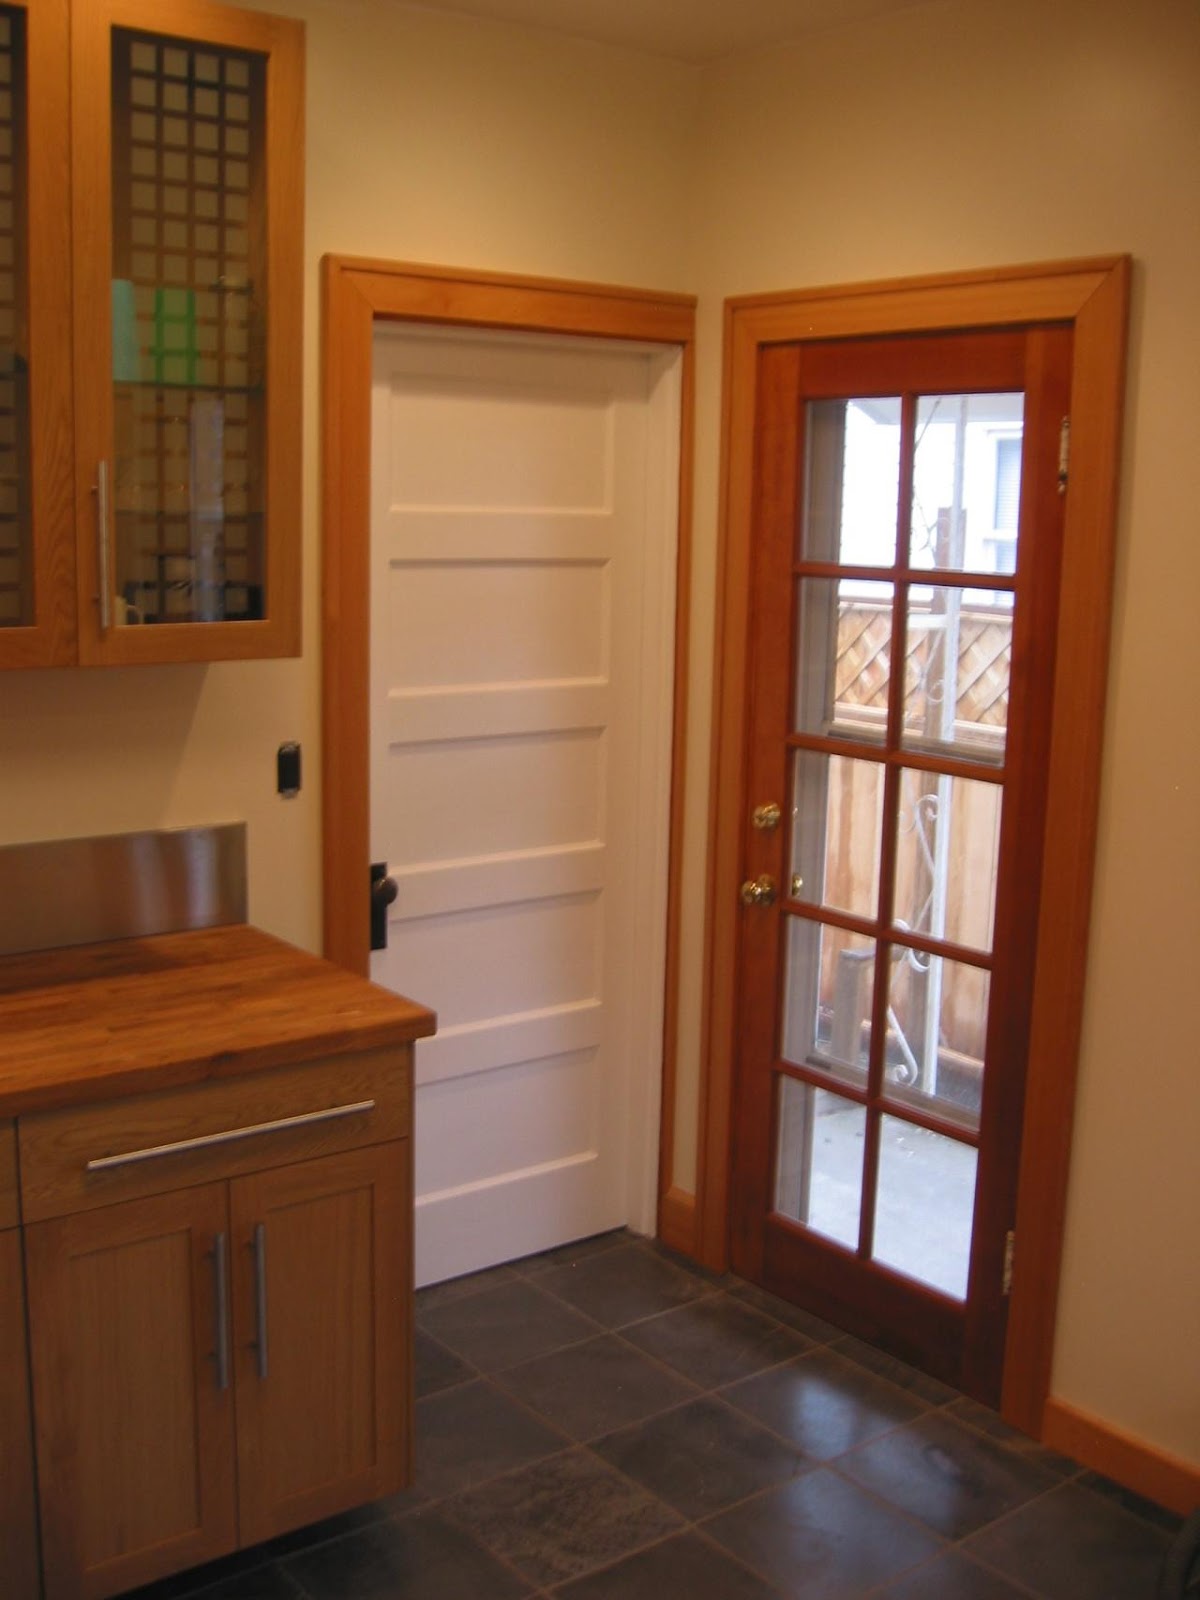 Kitchen Doors - Decor Units